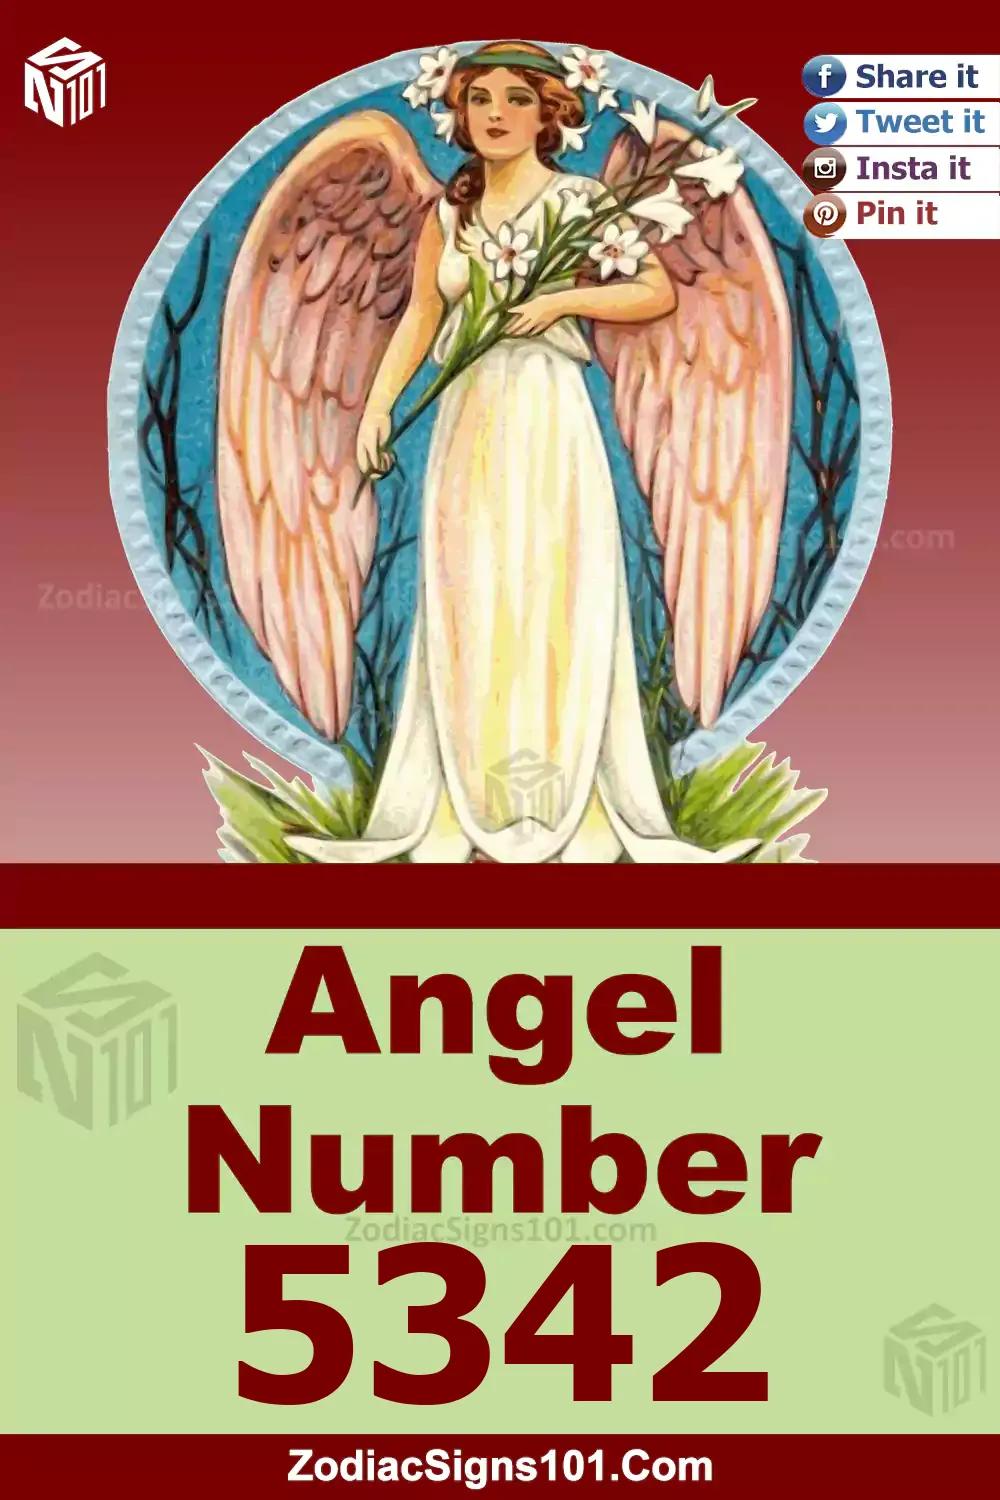 5342-Angel-Number-Meaning.jpg